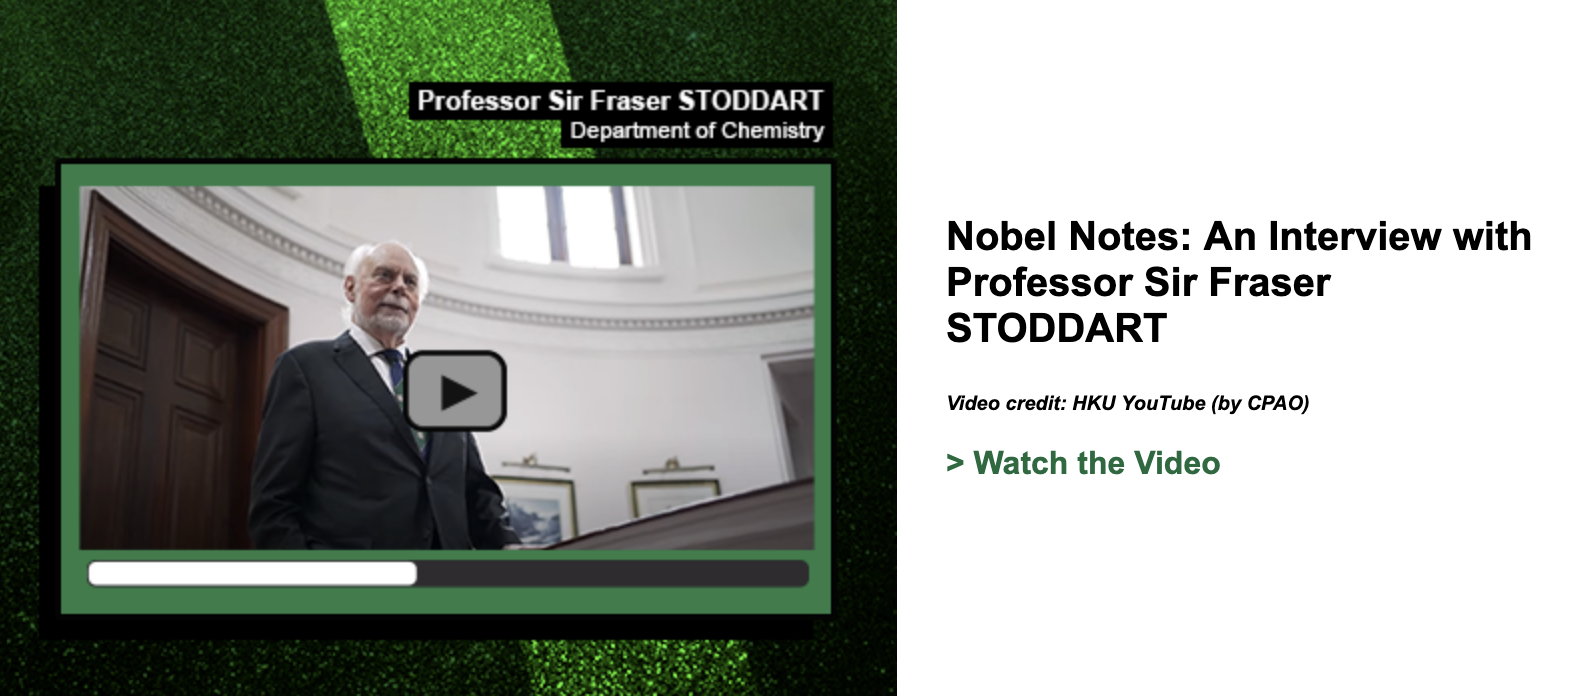 Nobel Notes: An Interview with Professor Sir Fraser STODDART